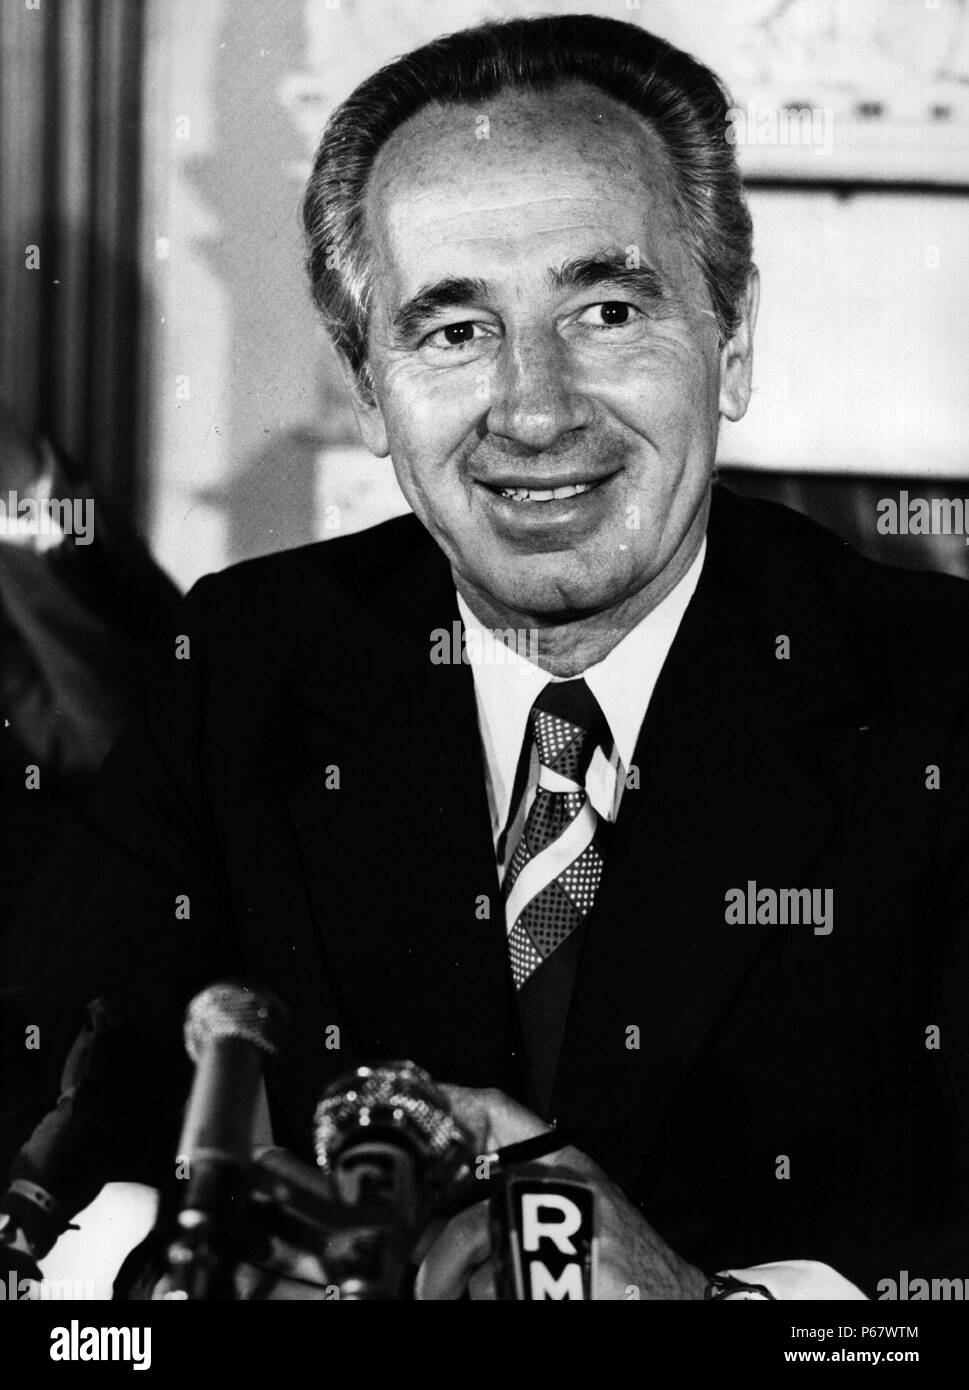 Shimon Peres AGOSTO 1923-presente. Estadista israelí nacido en Polonia. Presidente del Estado de Israel 2007-2014. Peres sirvió dos veces como Primer Ministro de Israel Foto de stock